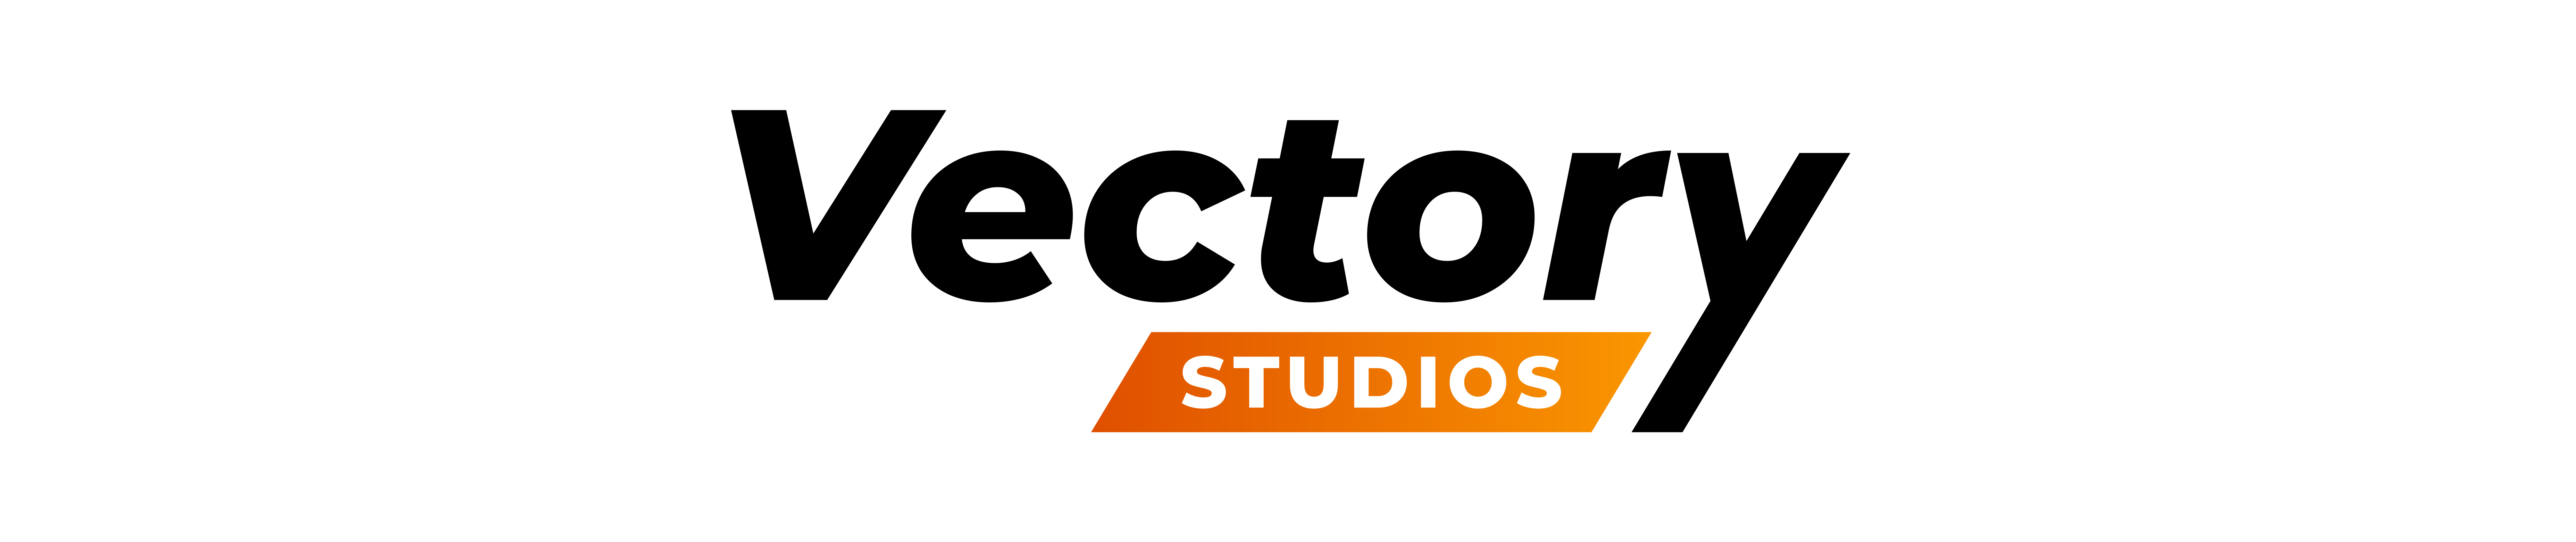 Vectory Studios's profile banner